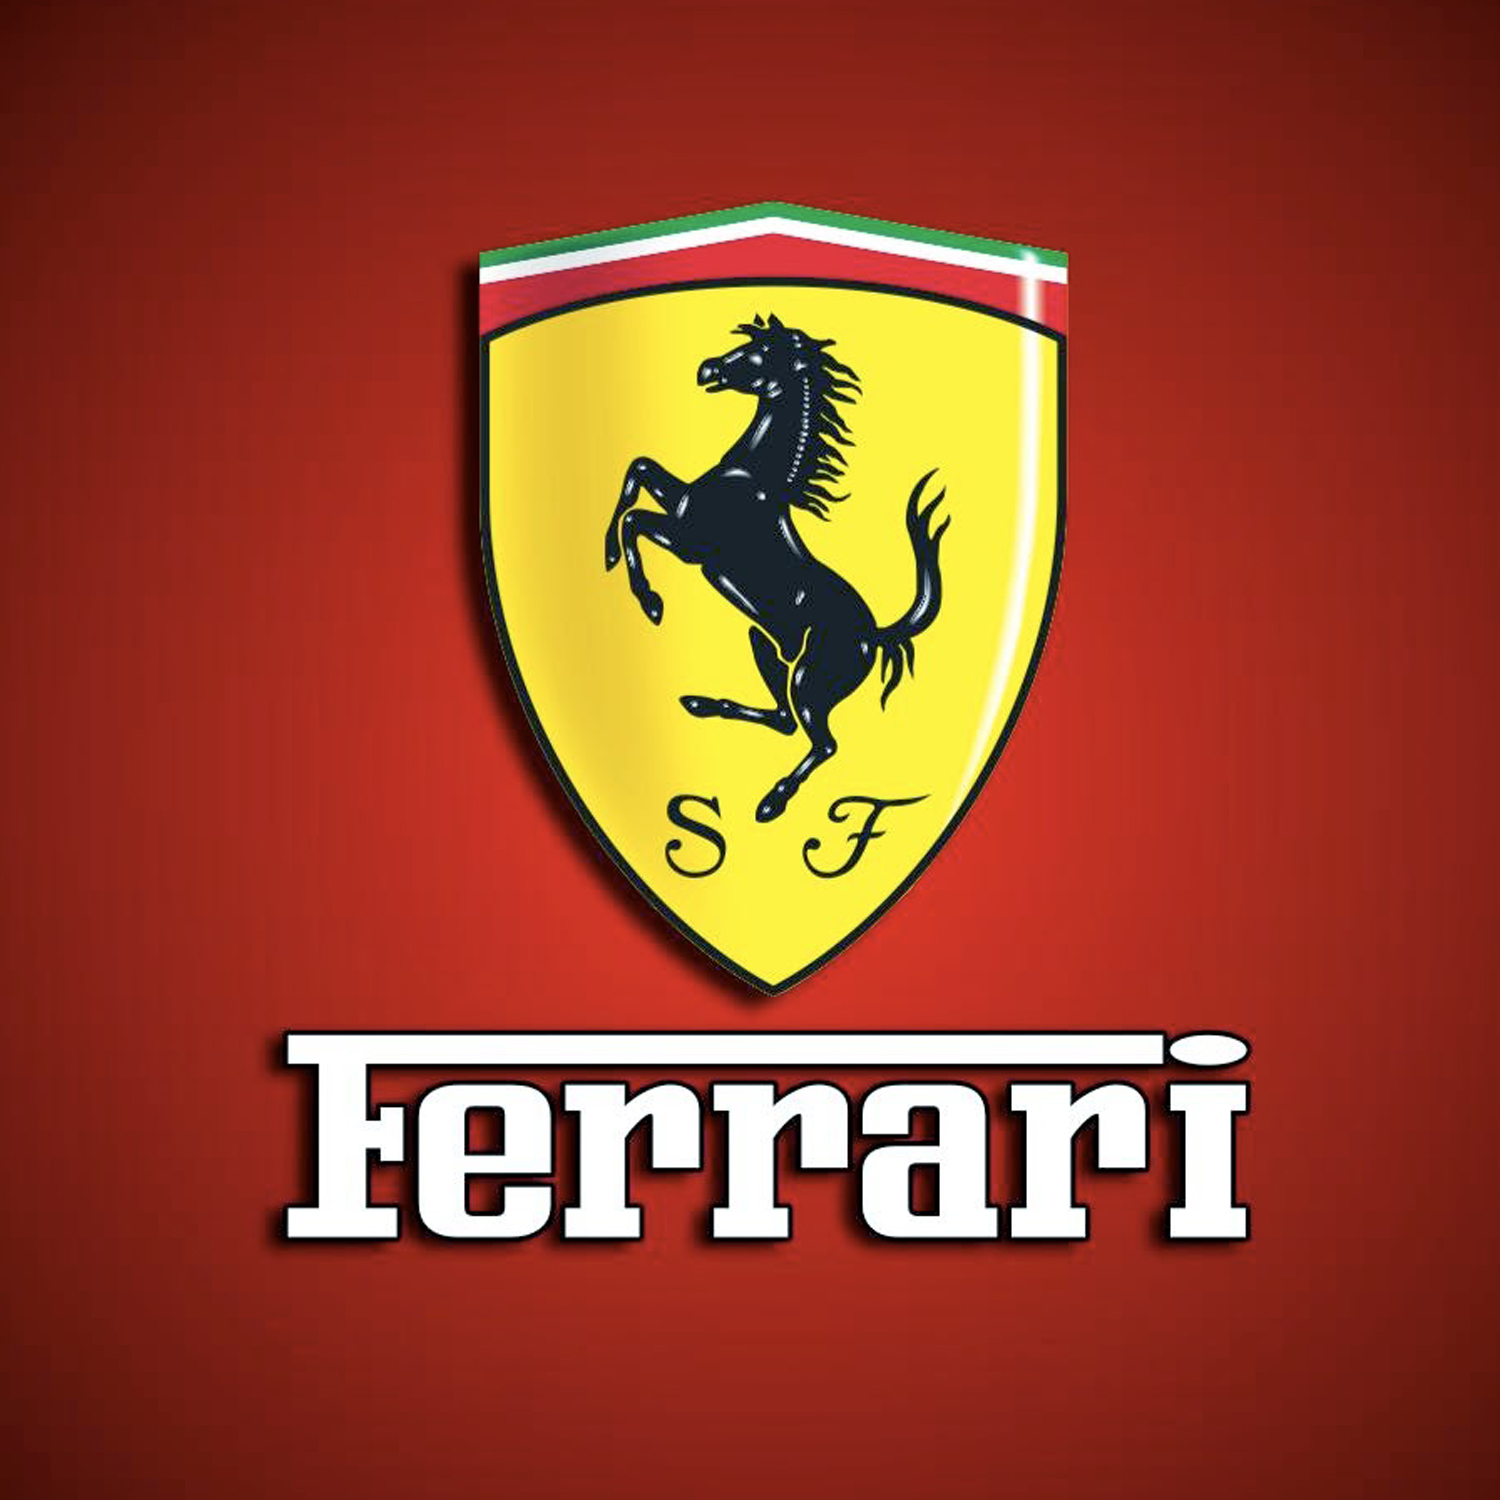 Ferrari logo car emblem